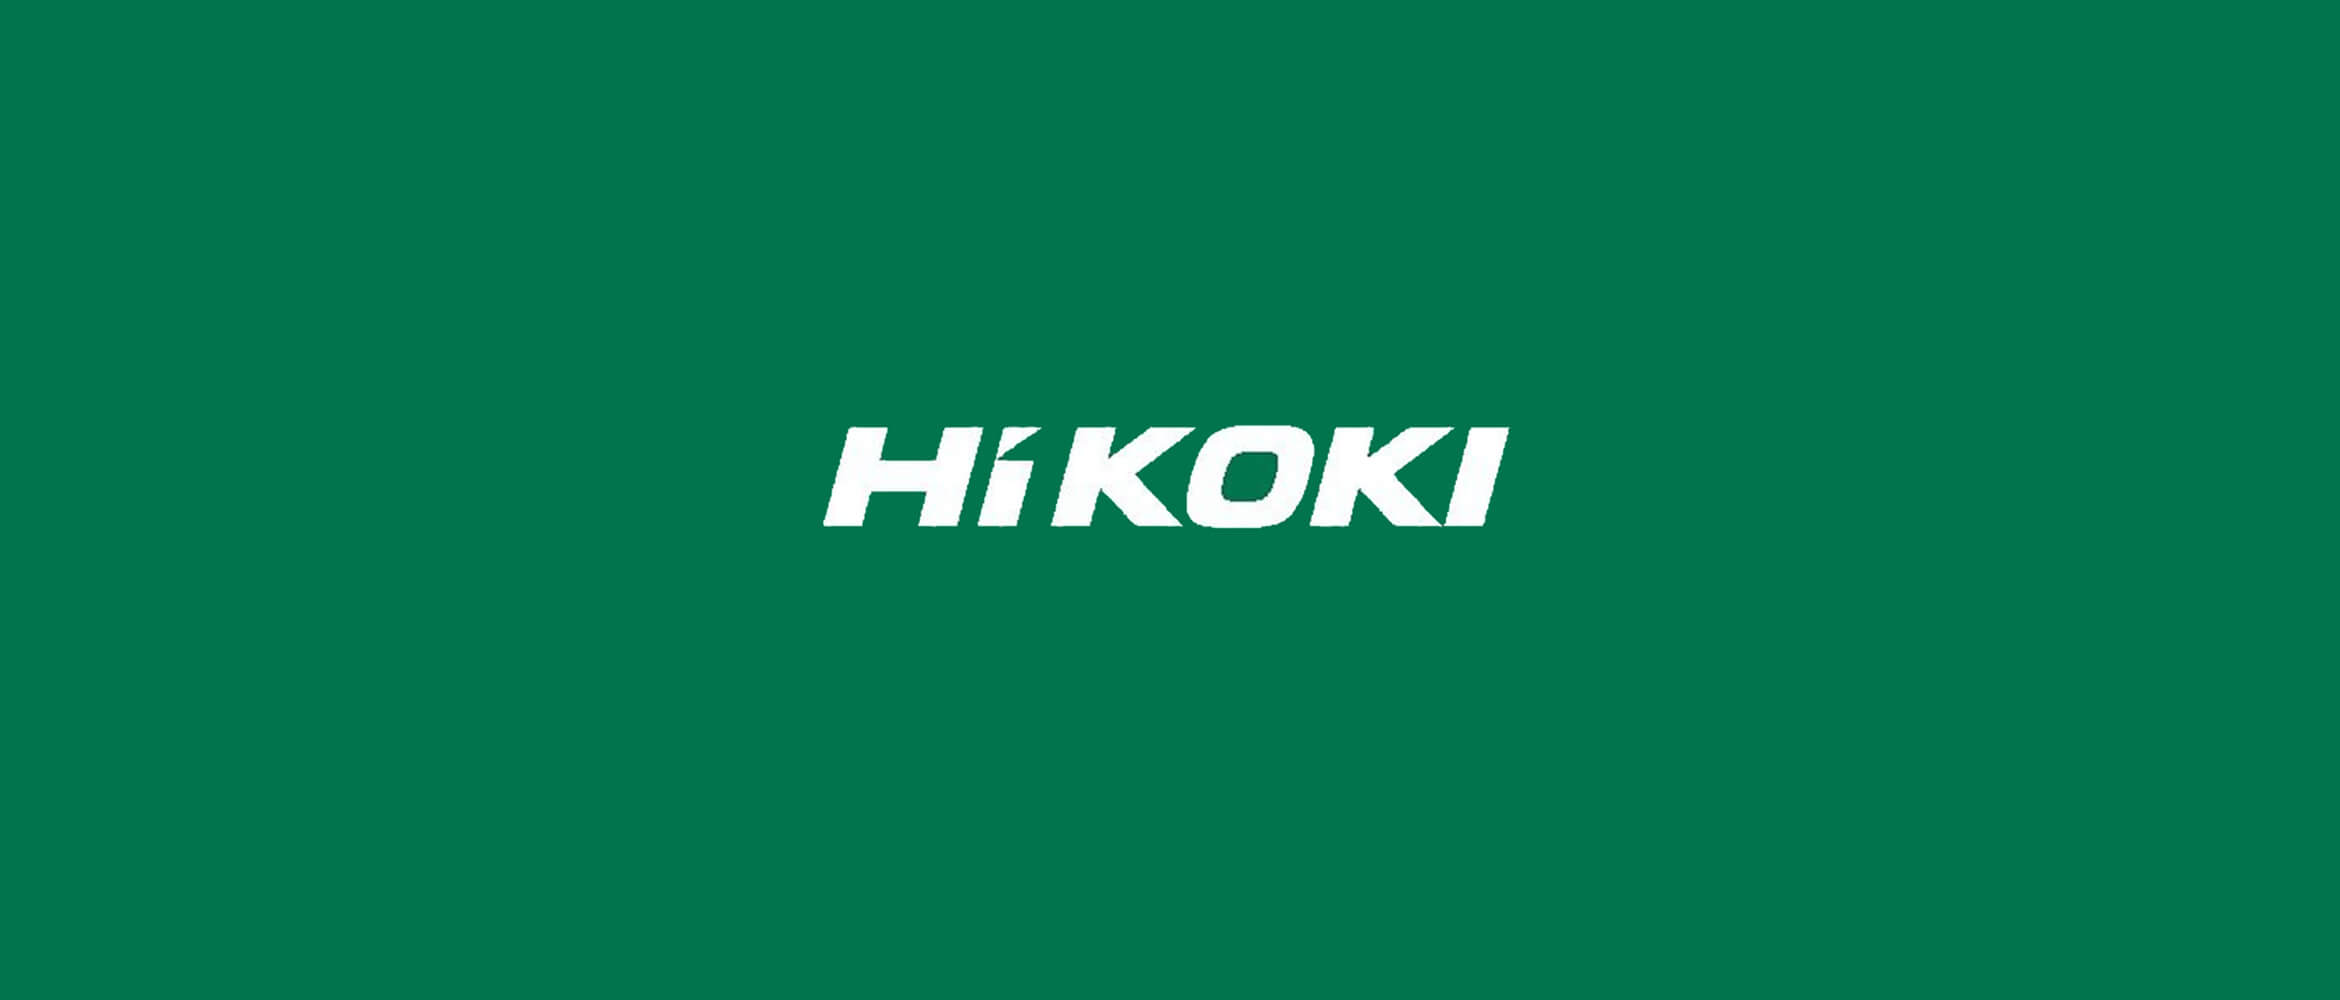 HiKOKI(旧日立) アーカイブ - YAMAMURA SHOP